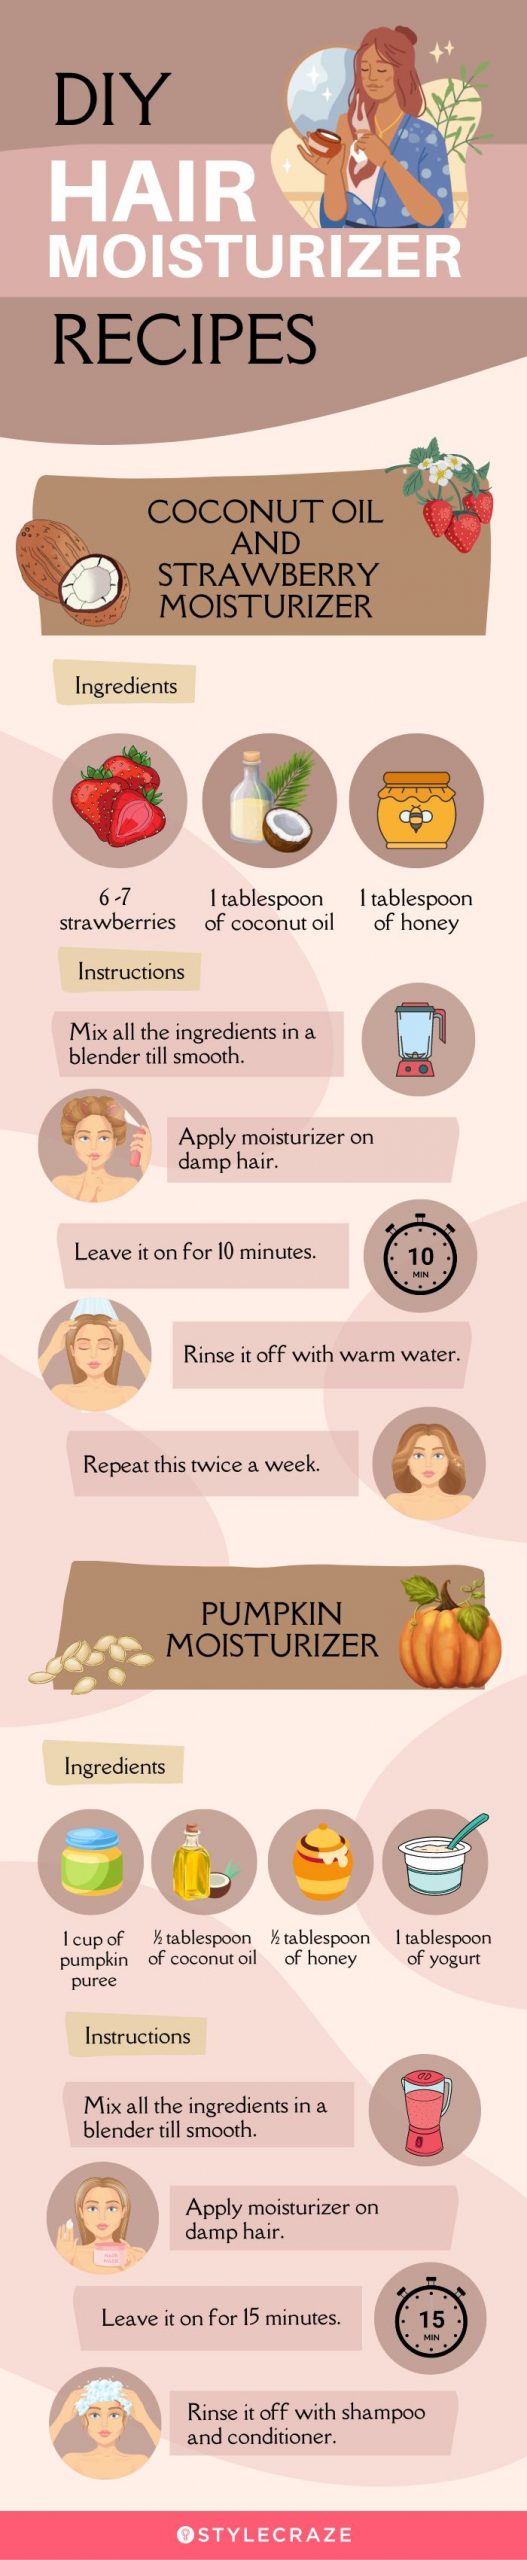 diy hair moisturizer recipes (infographic)